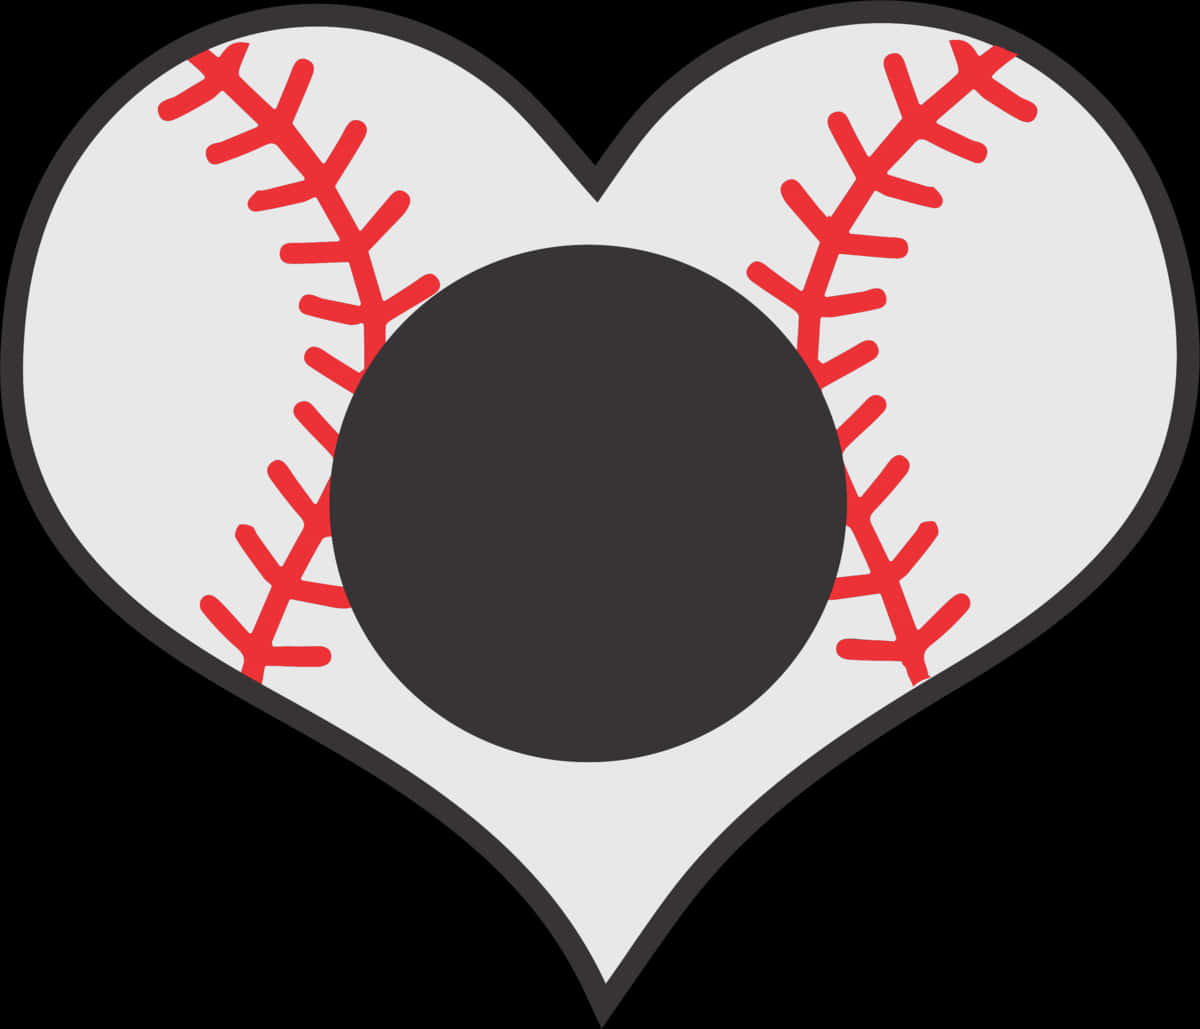 Baseball Heart Graphic PNG image